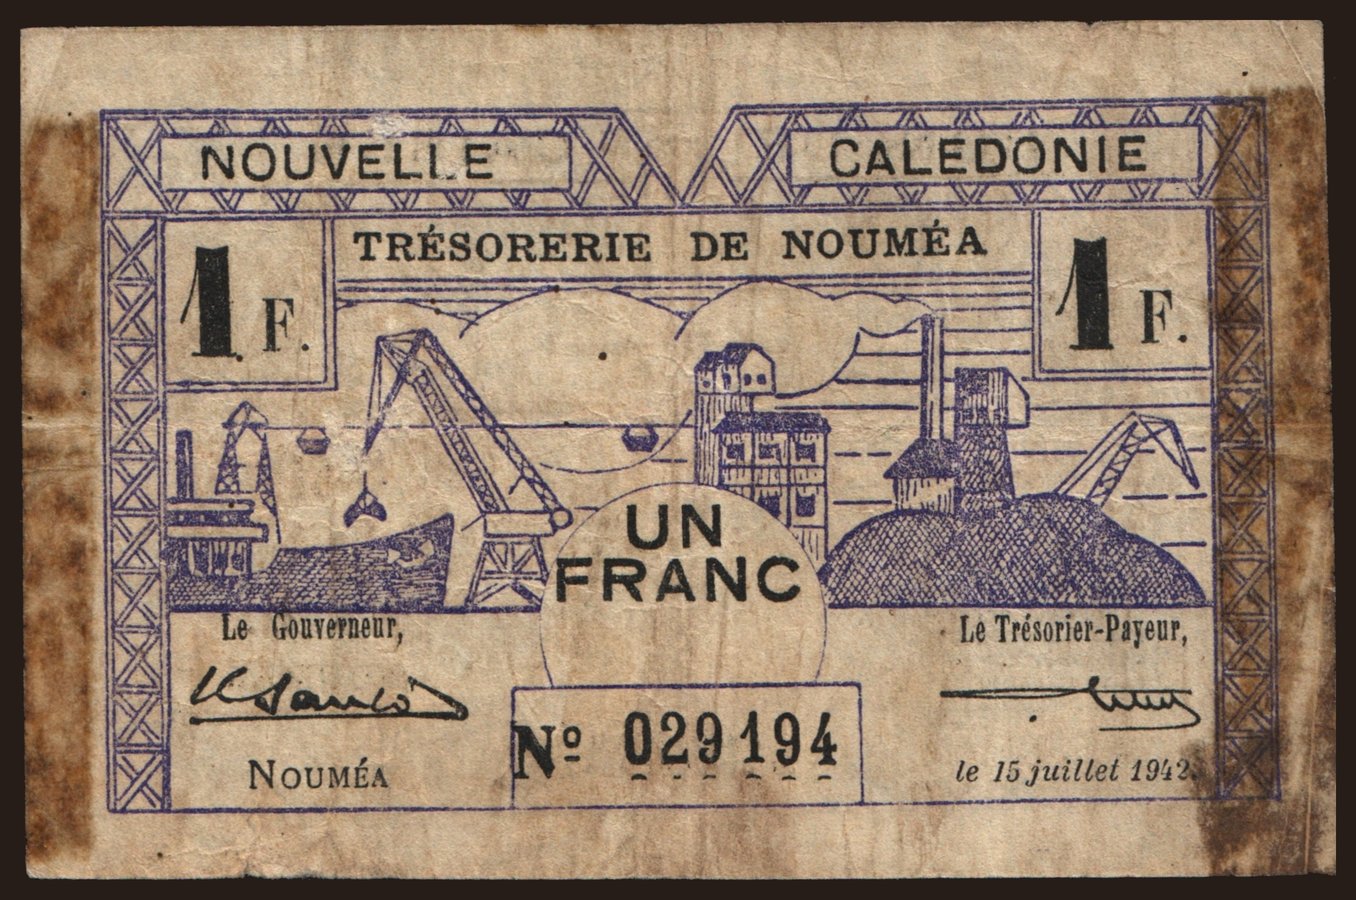 1 franc, 1942